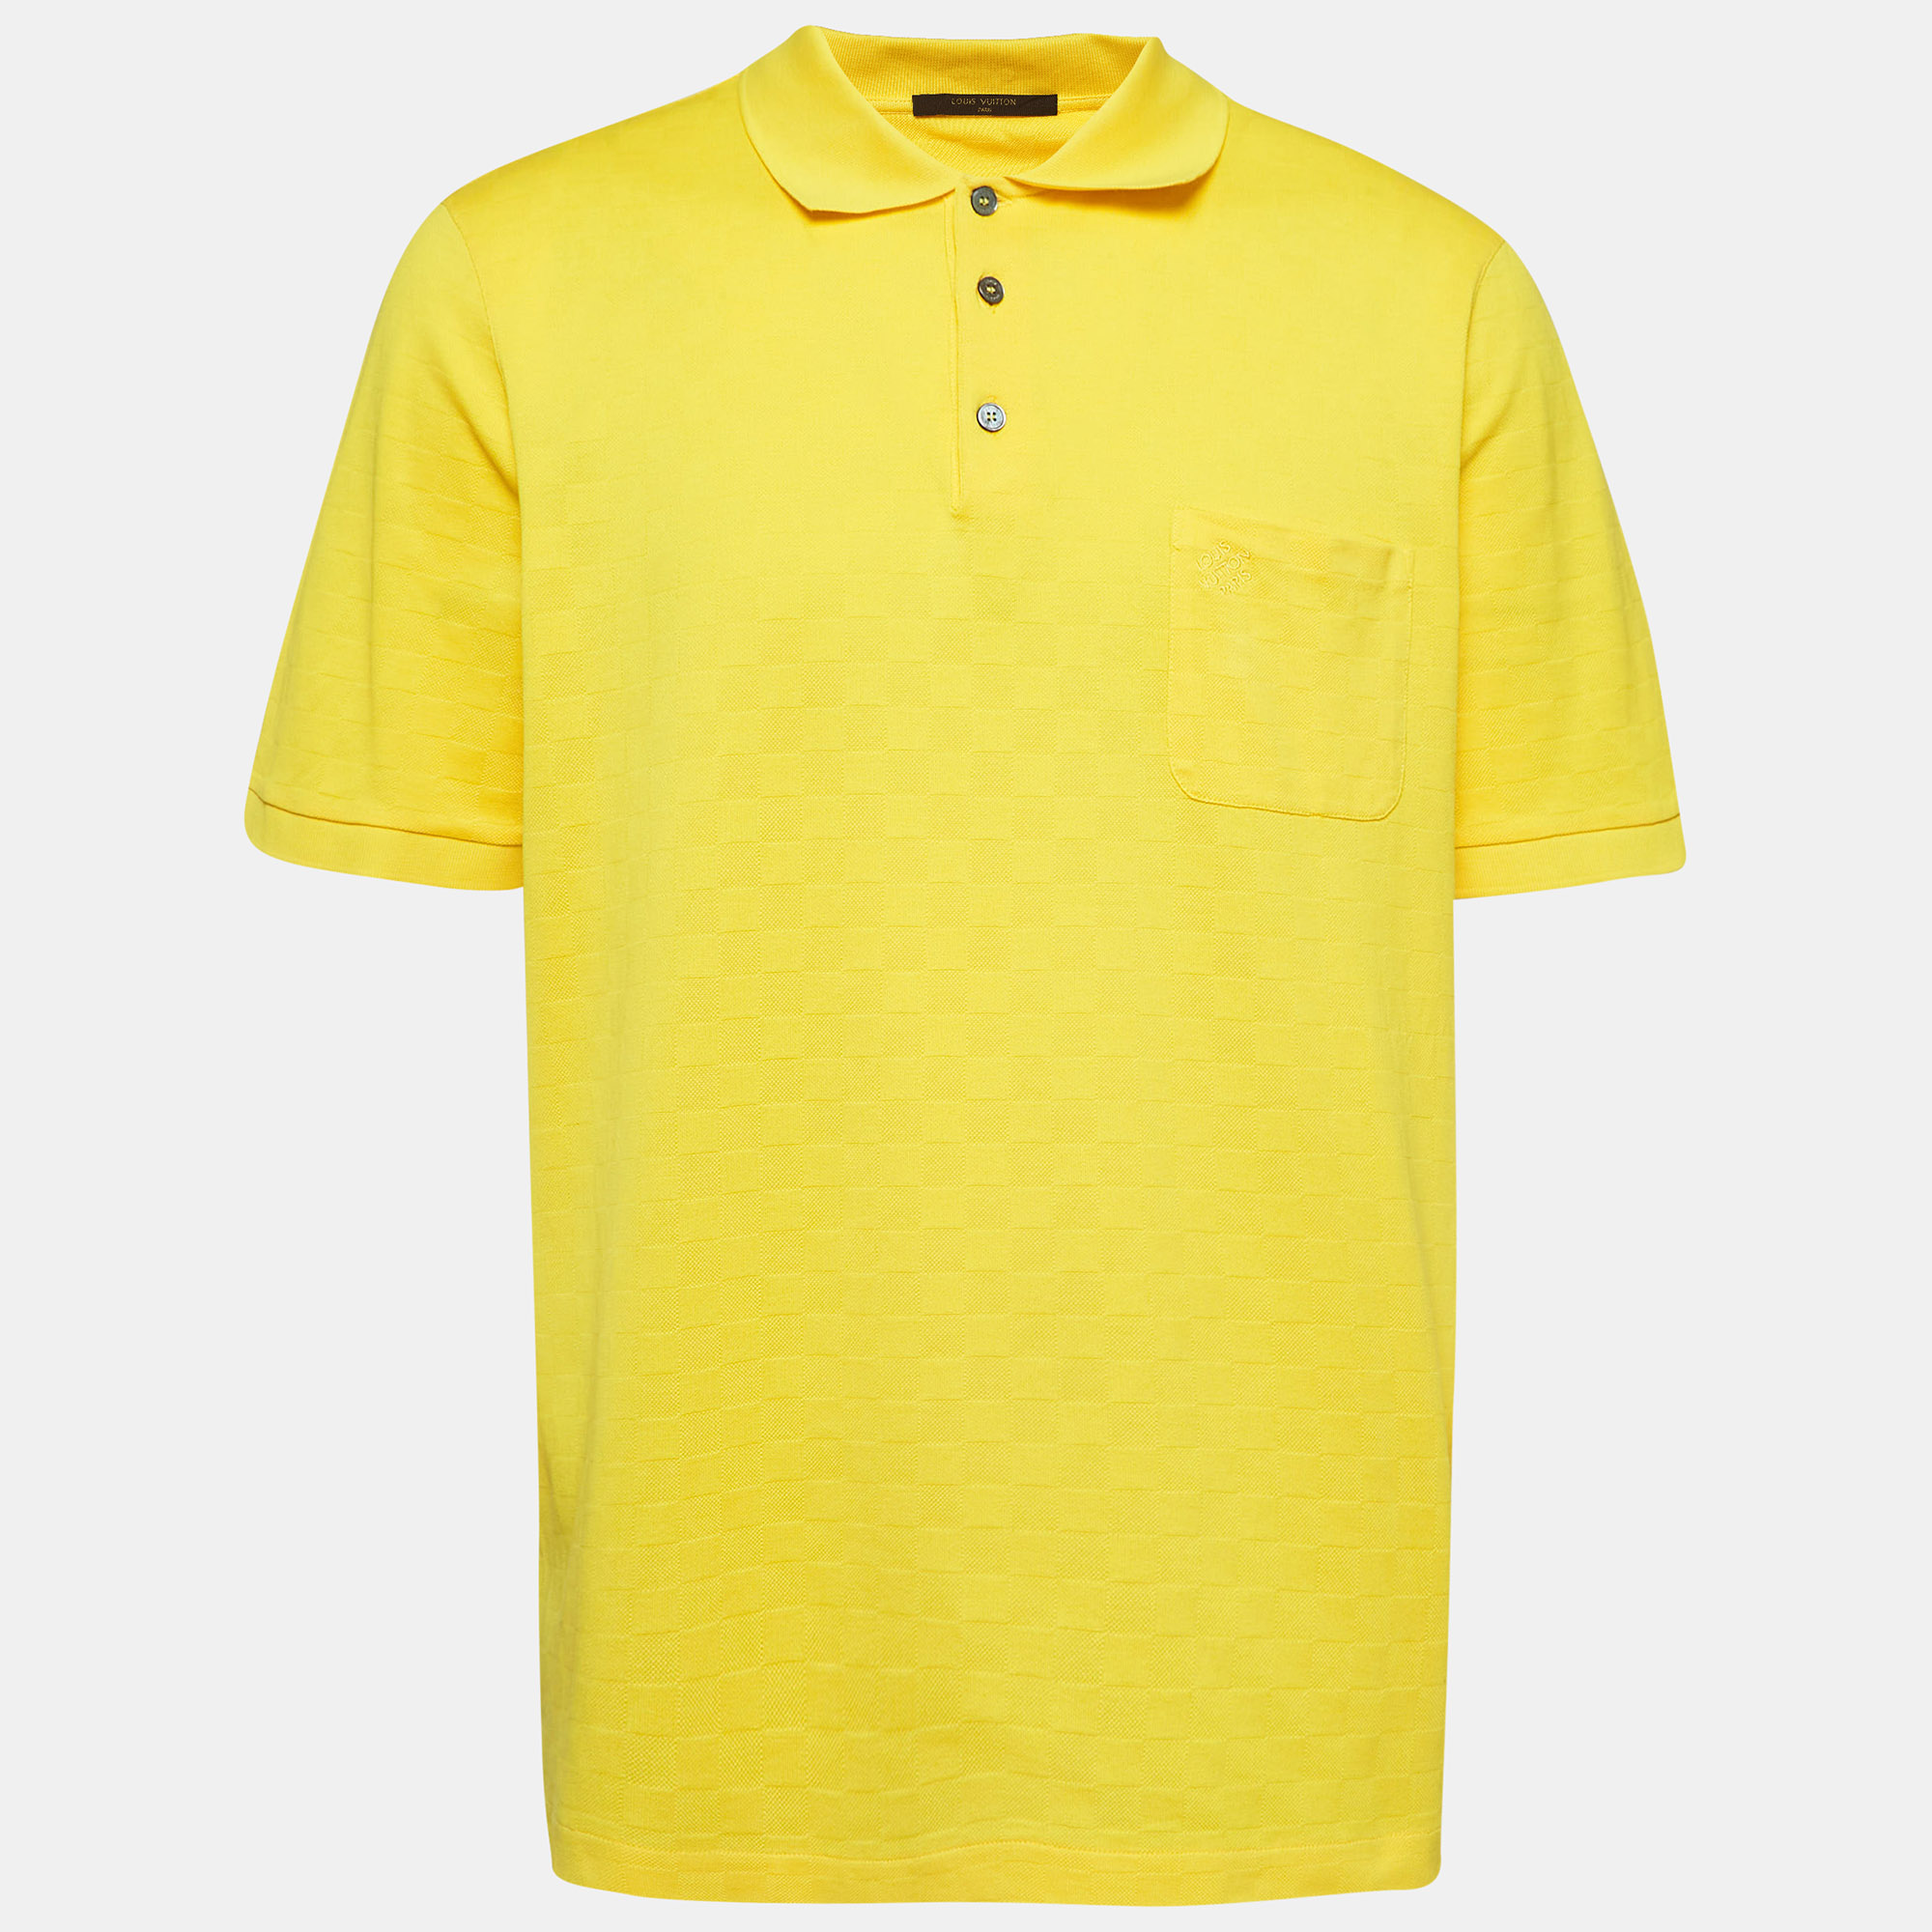 Louis vuitton yellow patterned cotton knit polo t-shirt 5l